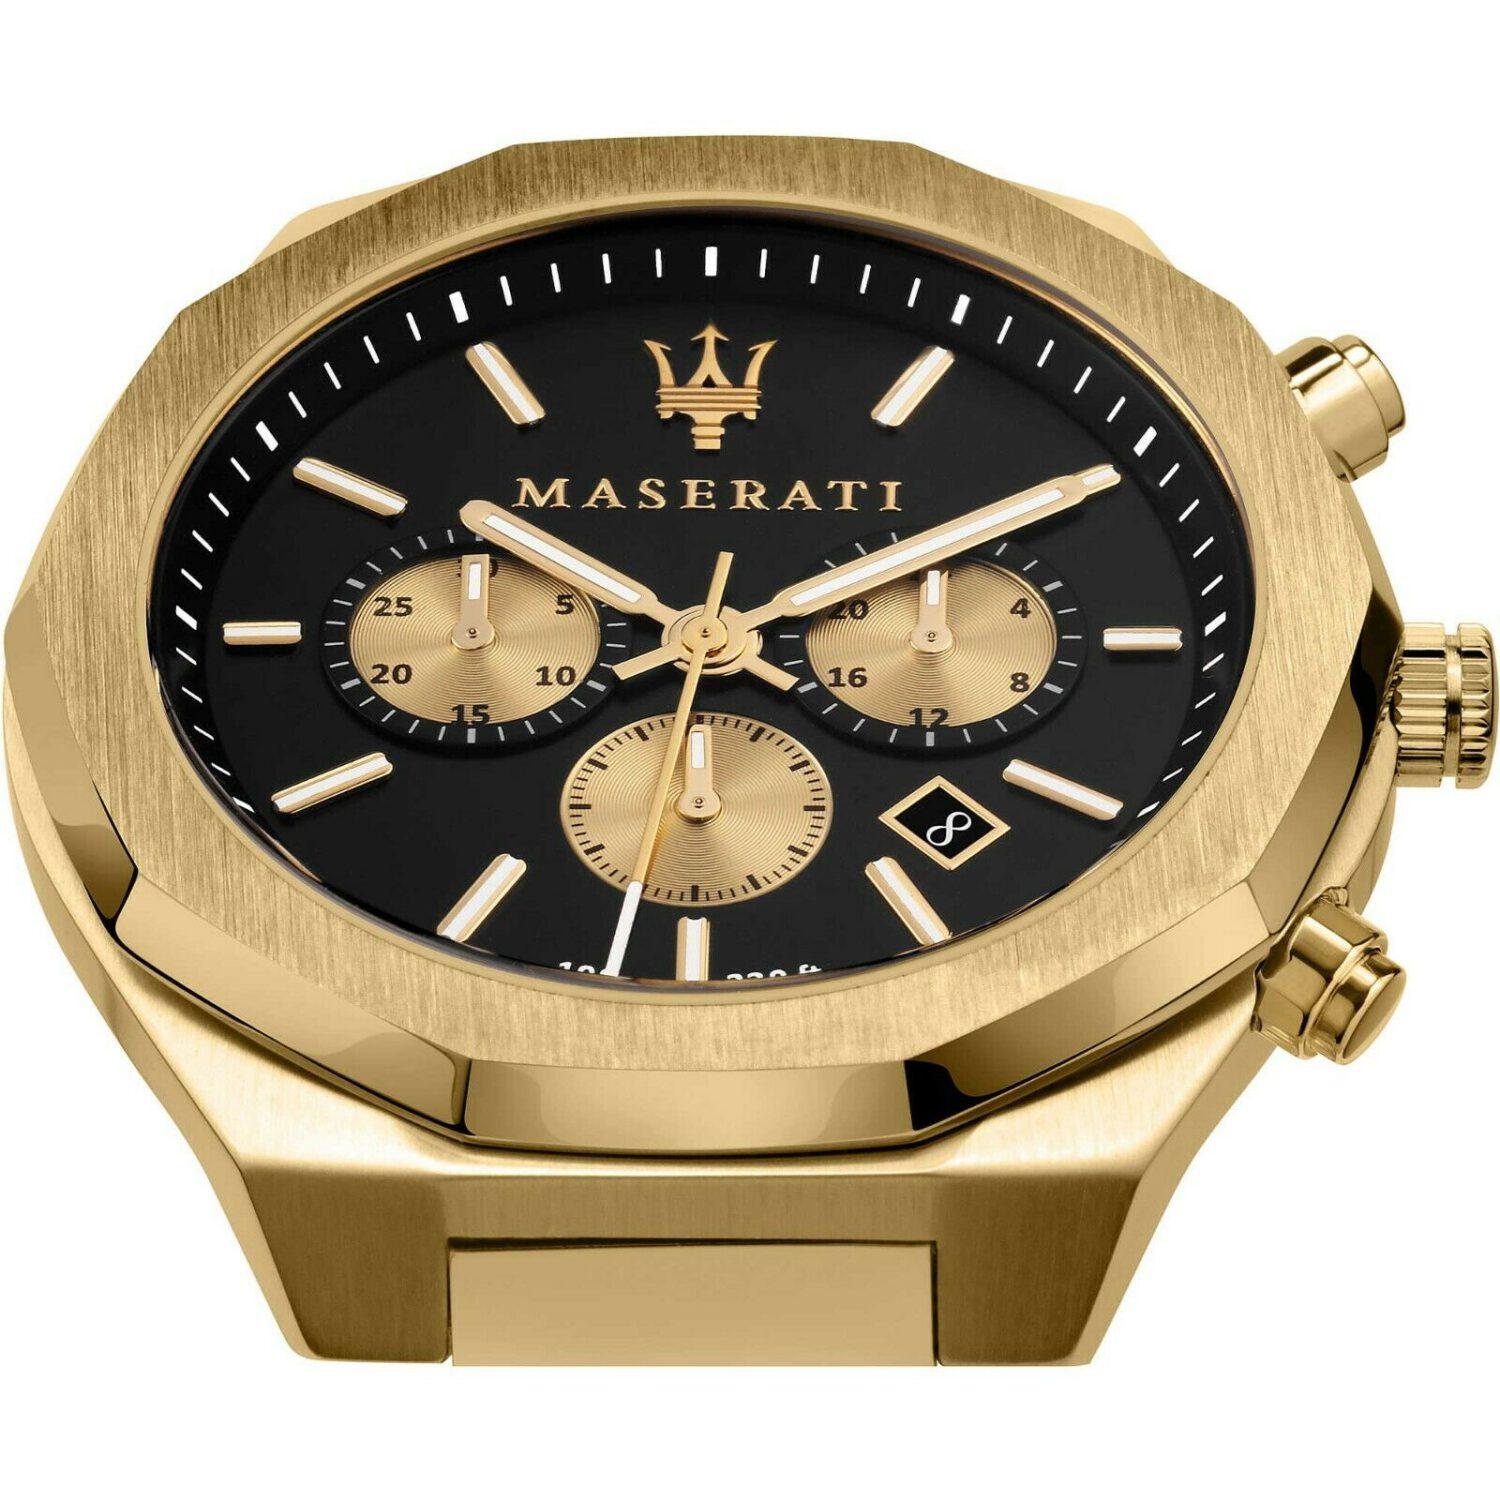 Zegarek męski Maserati R8873642001 Stile złoty